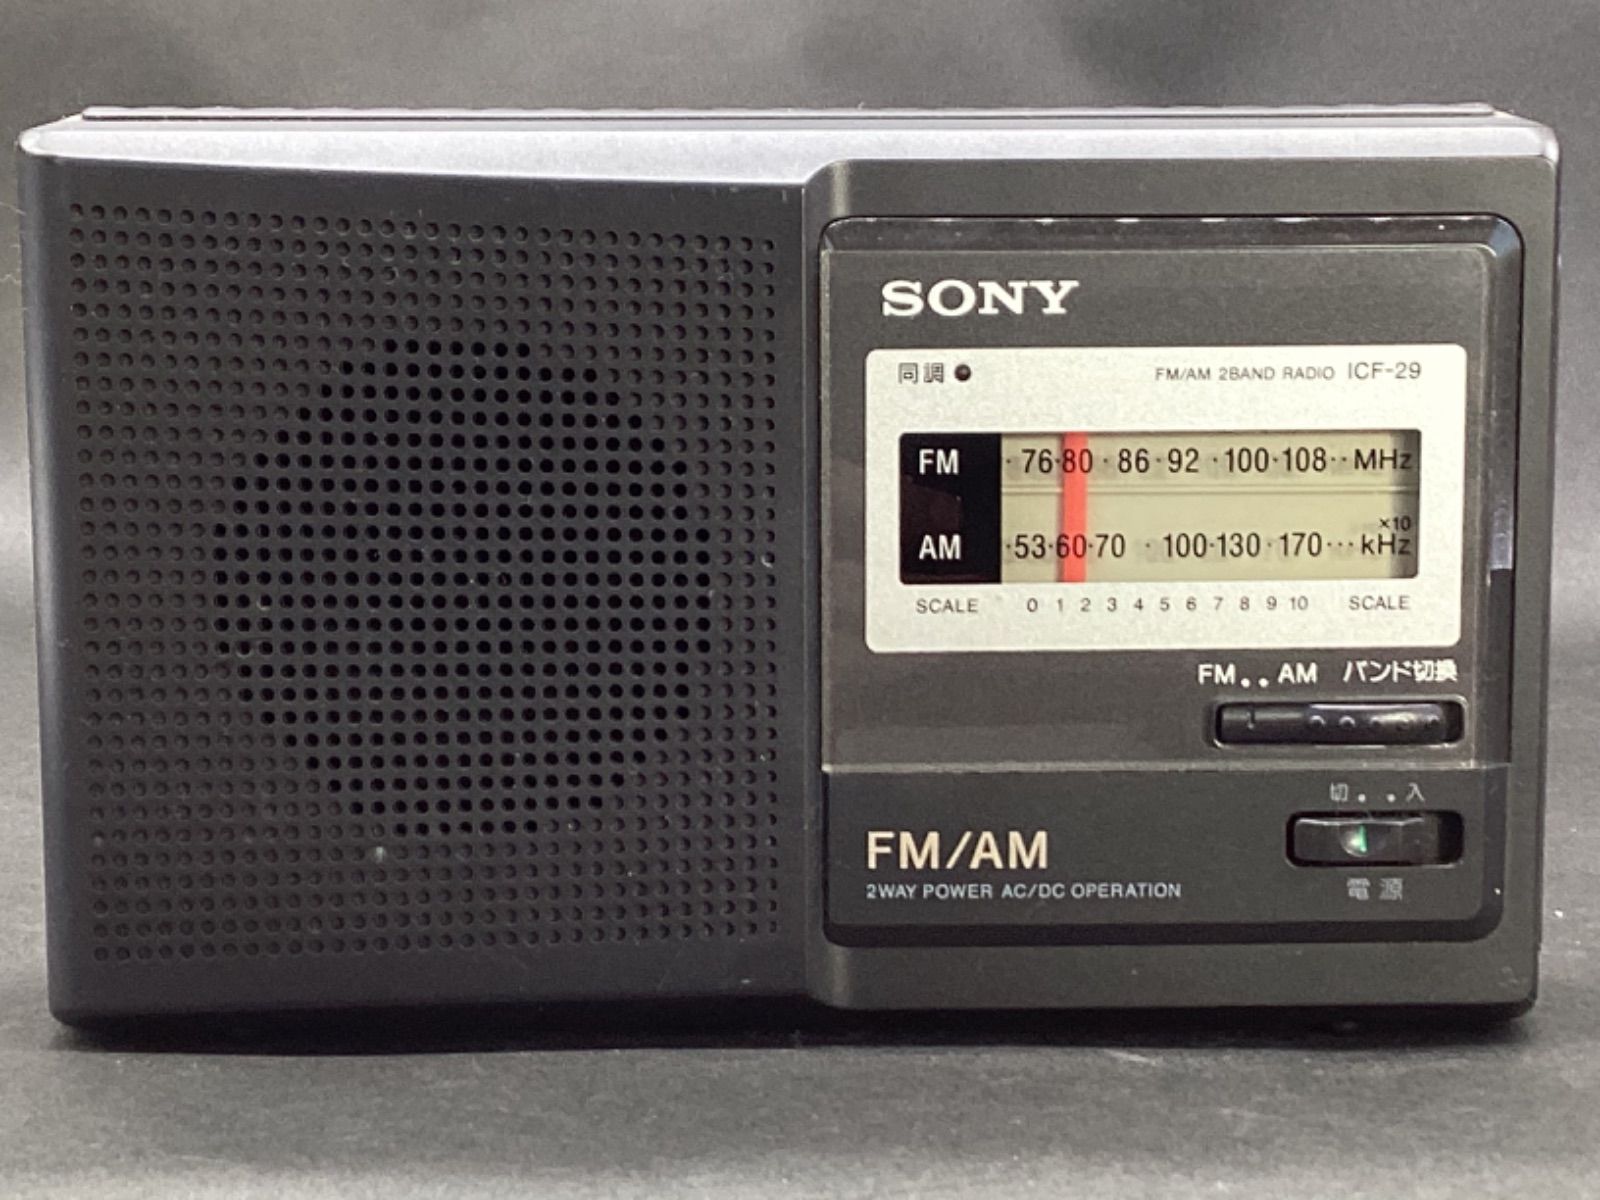 SONY FM AM ラジオ ICF-9 ソニーコンパクトラジオ 動作確認済み